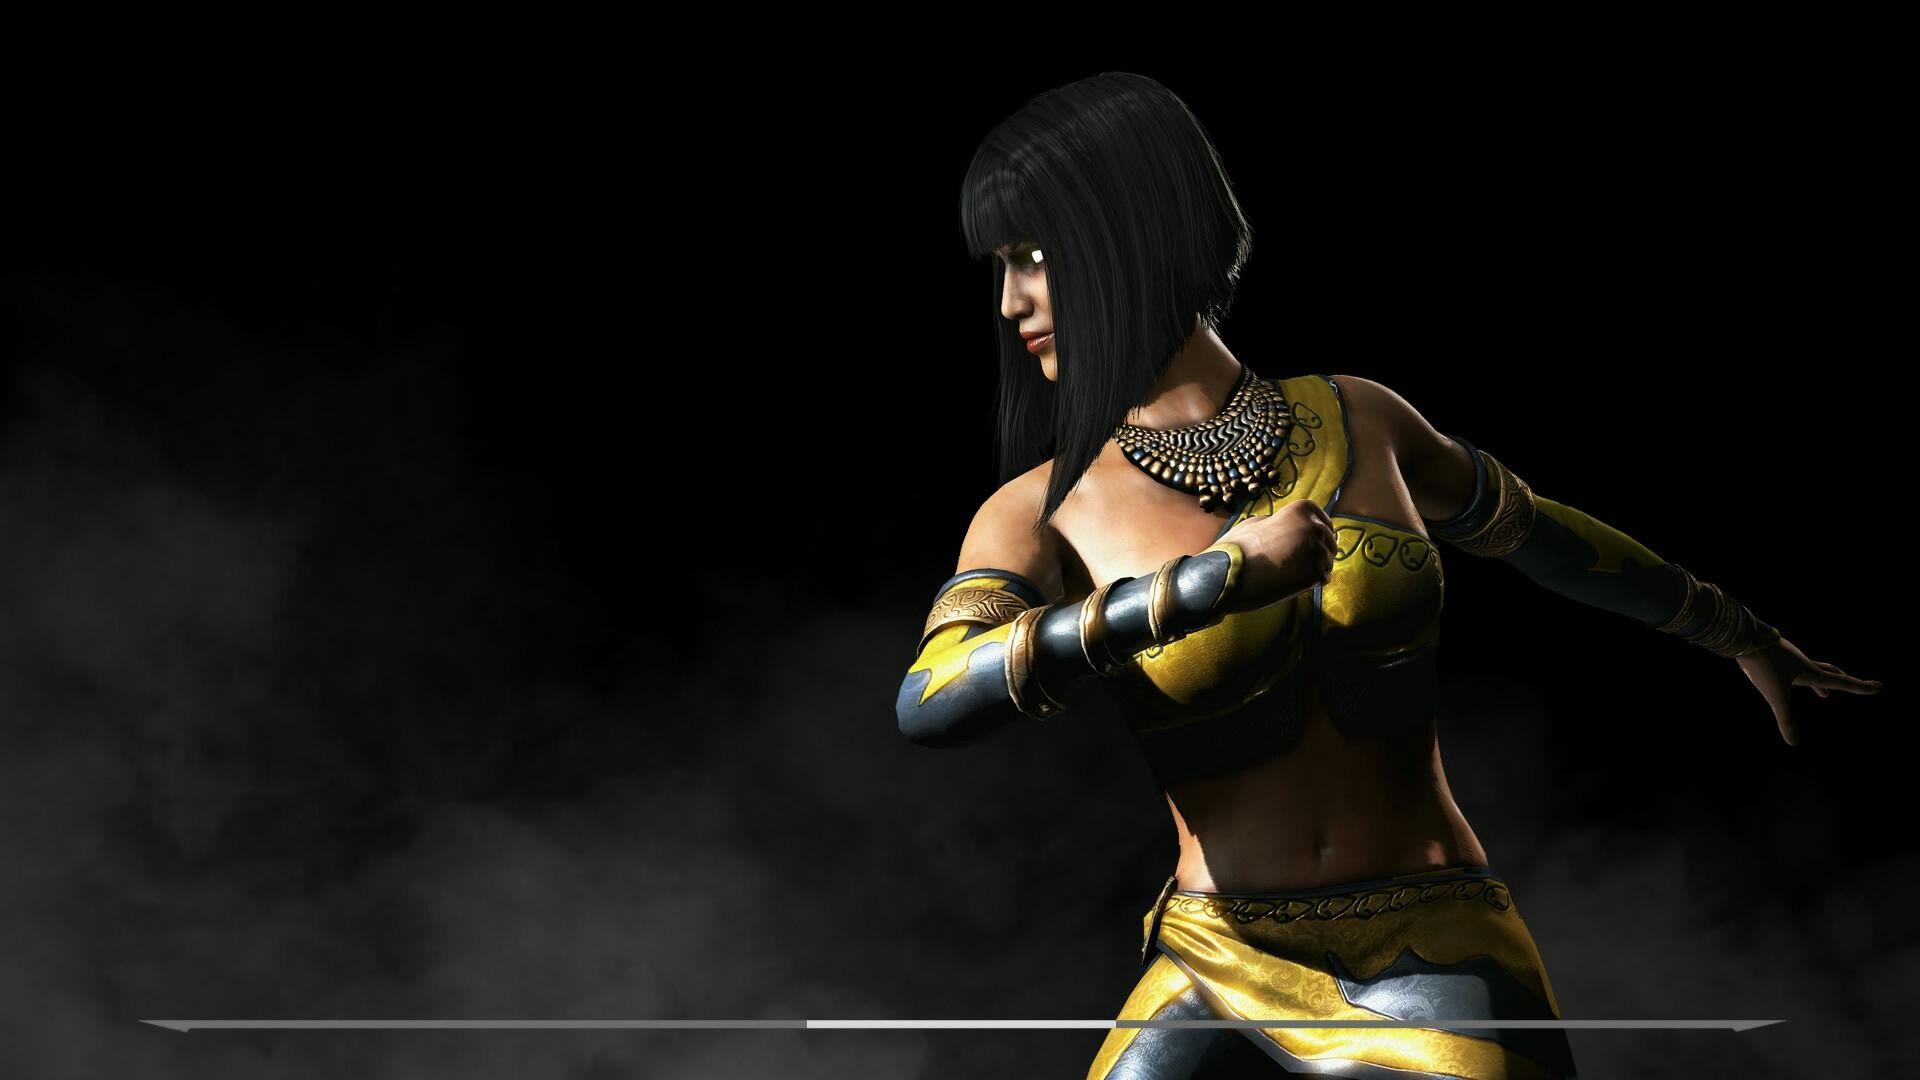 Tanya joins Mortal Kombat X